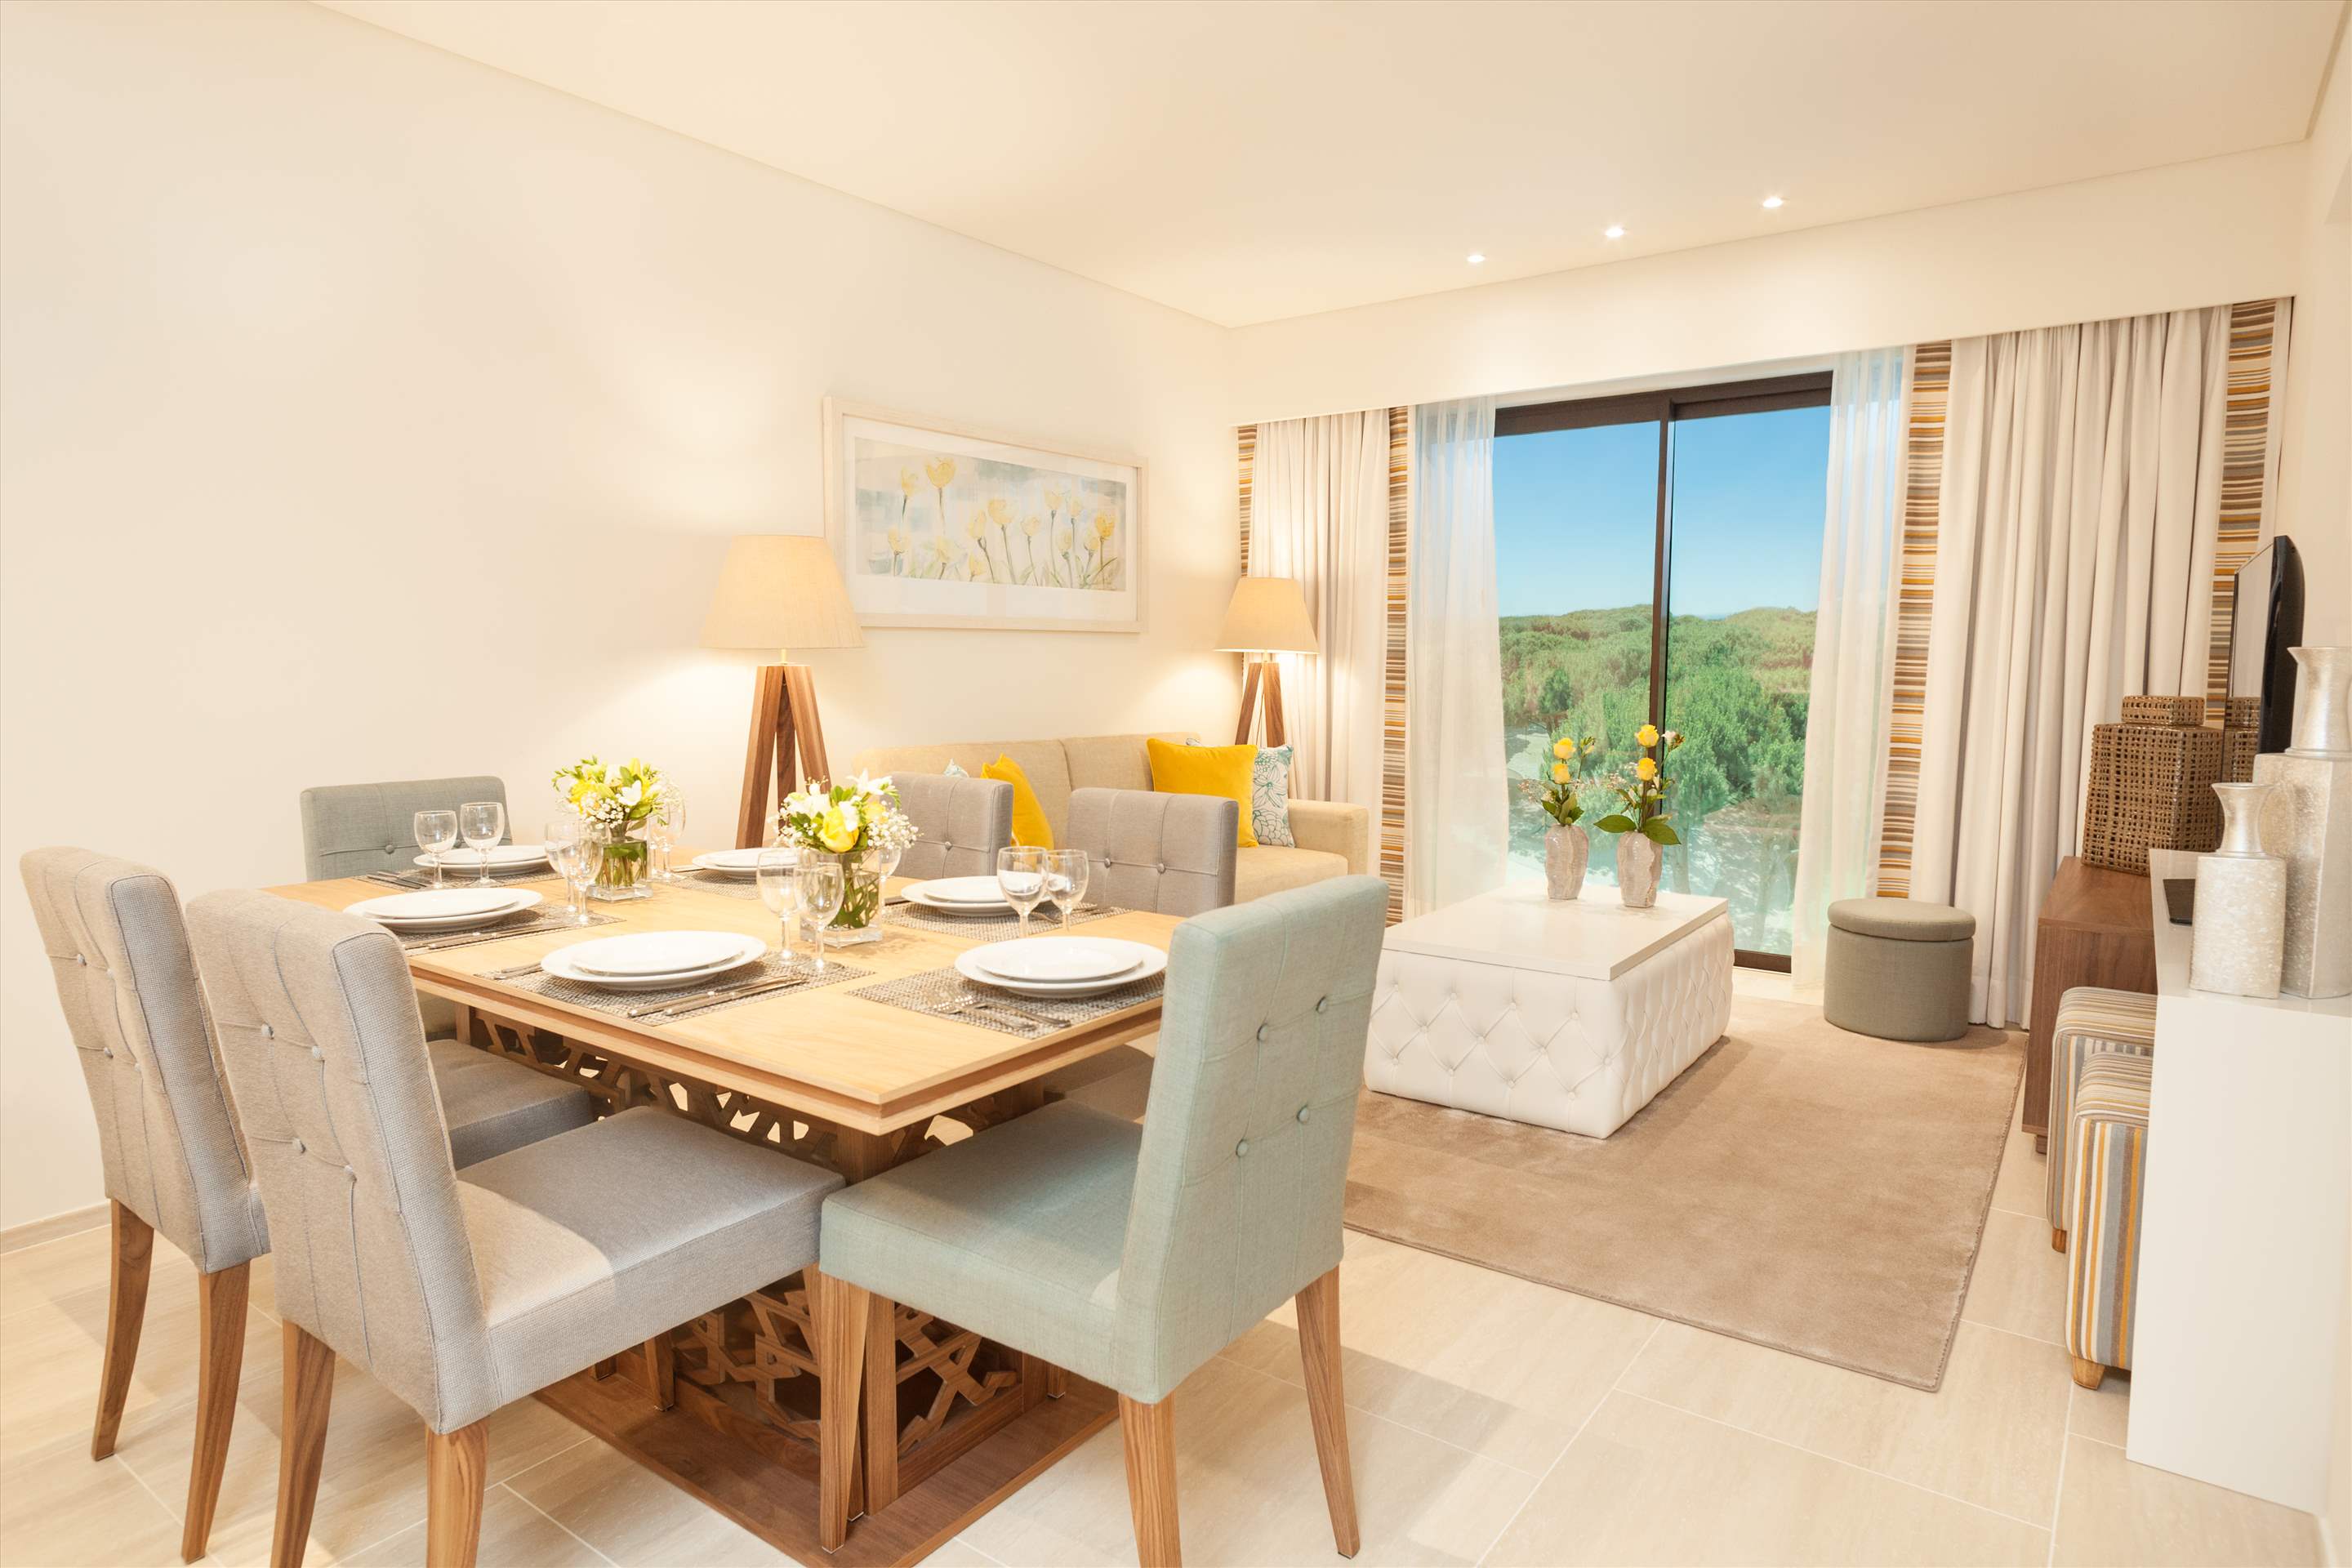 Pine Cliffs Gardens, Three Bedroom Suite, S/C Basis, 3 bedroom apartment in Pine Cliffs Resort, Algarve Photo #11